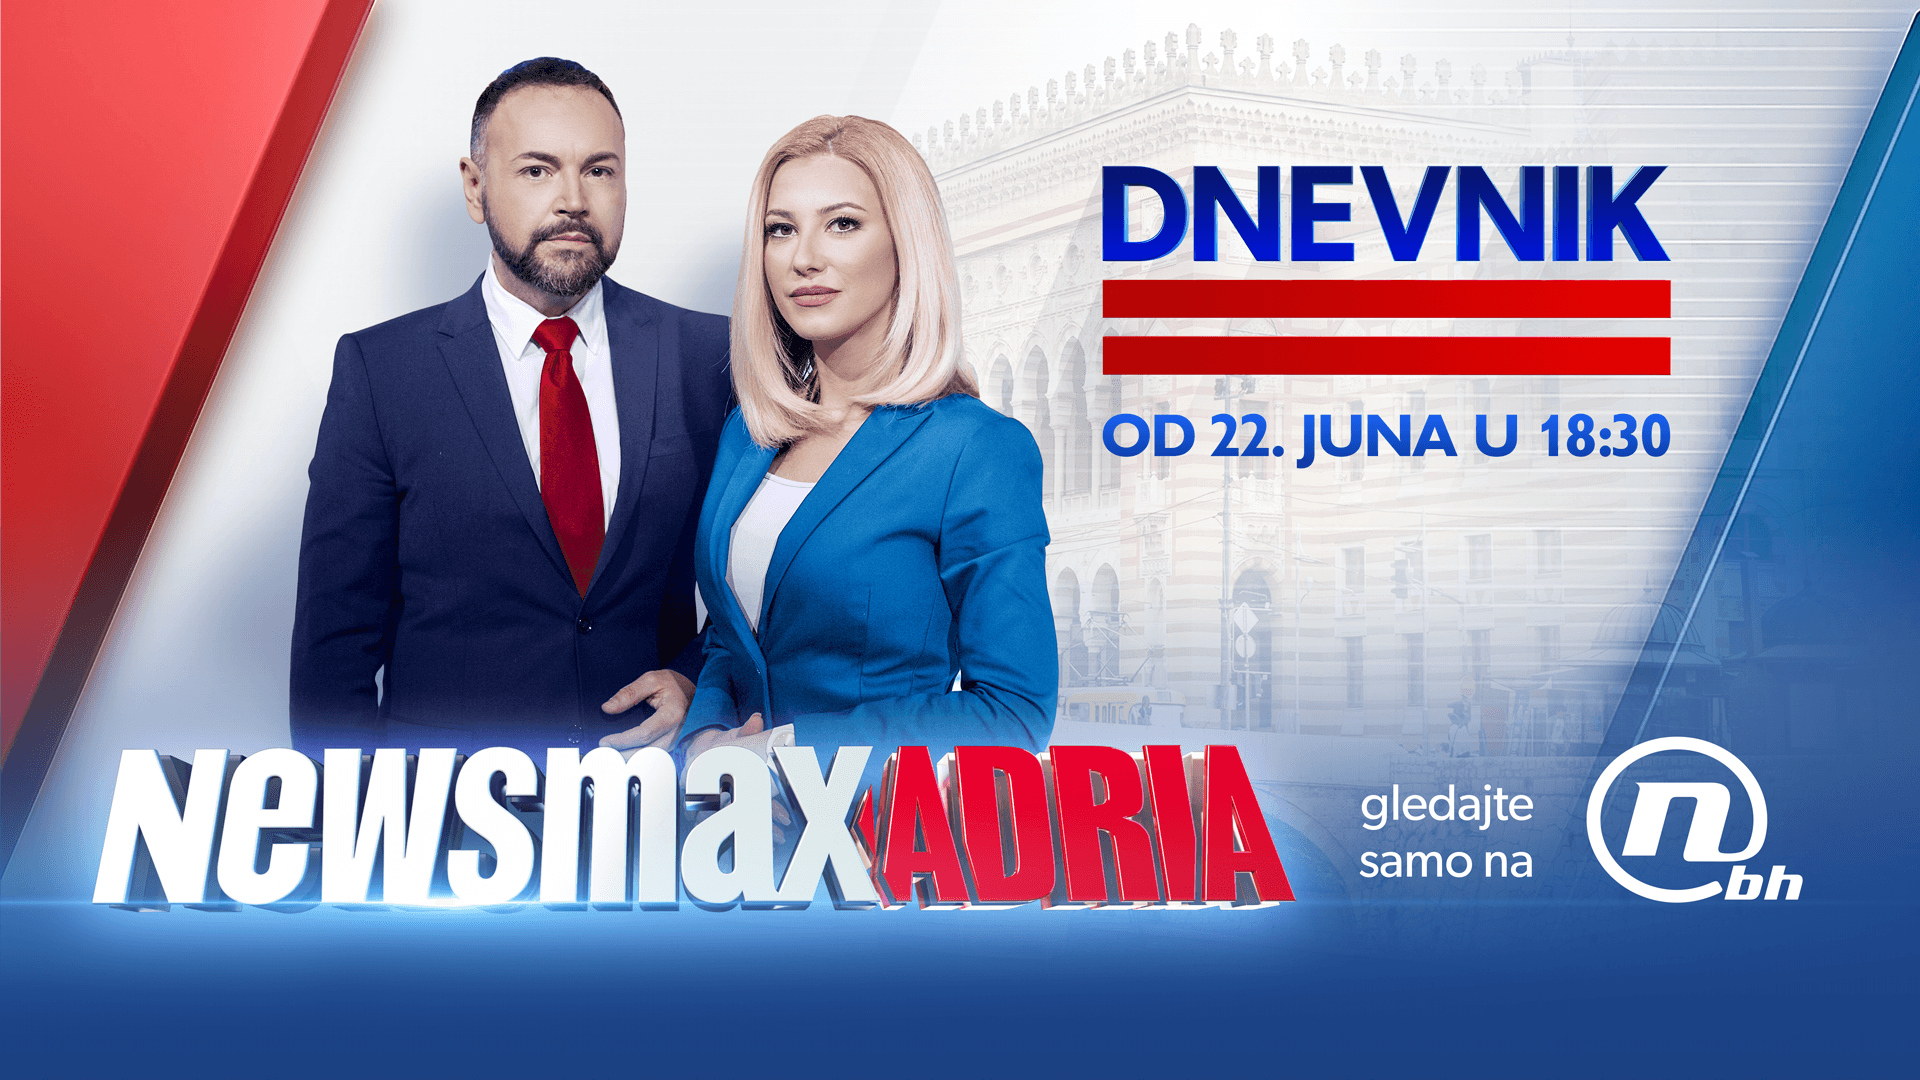 Newsmax Adria – novi projekat United Media - Avaz